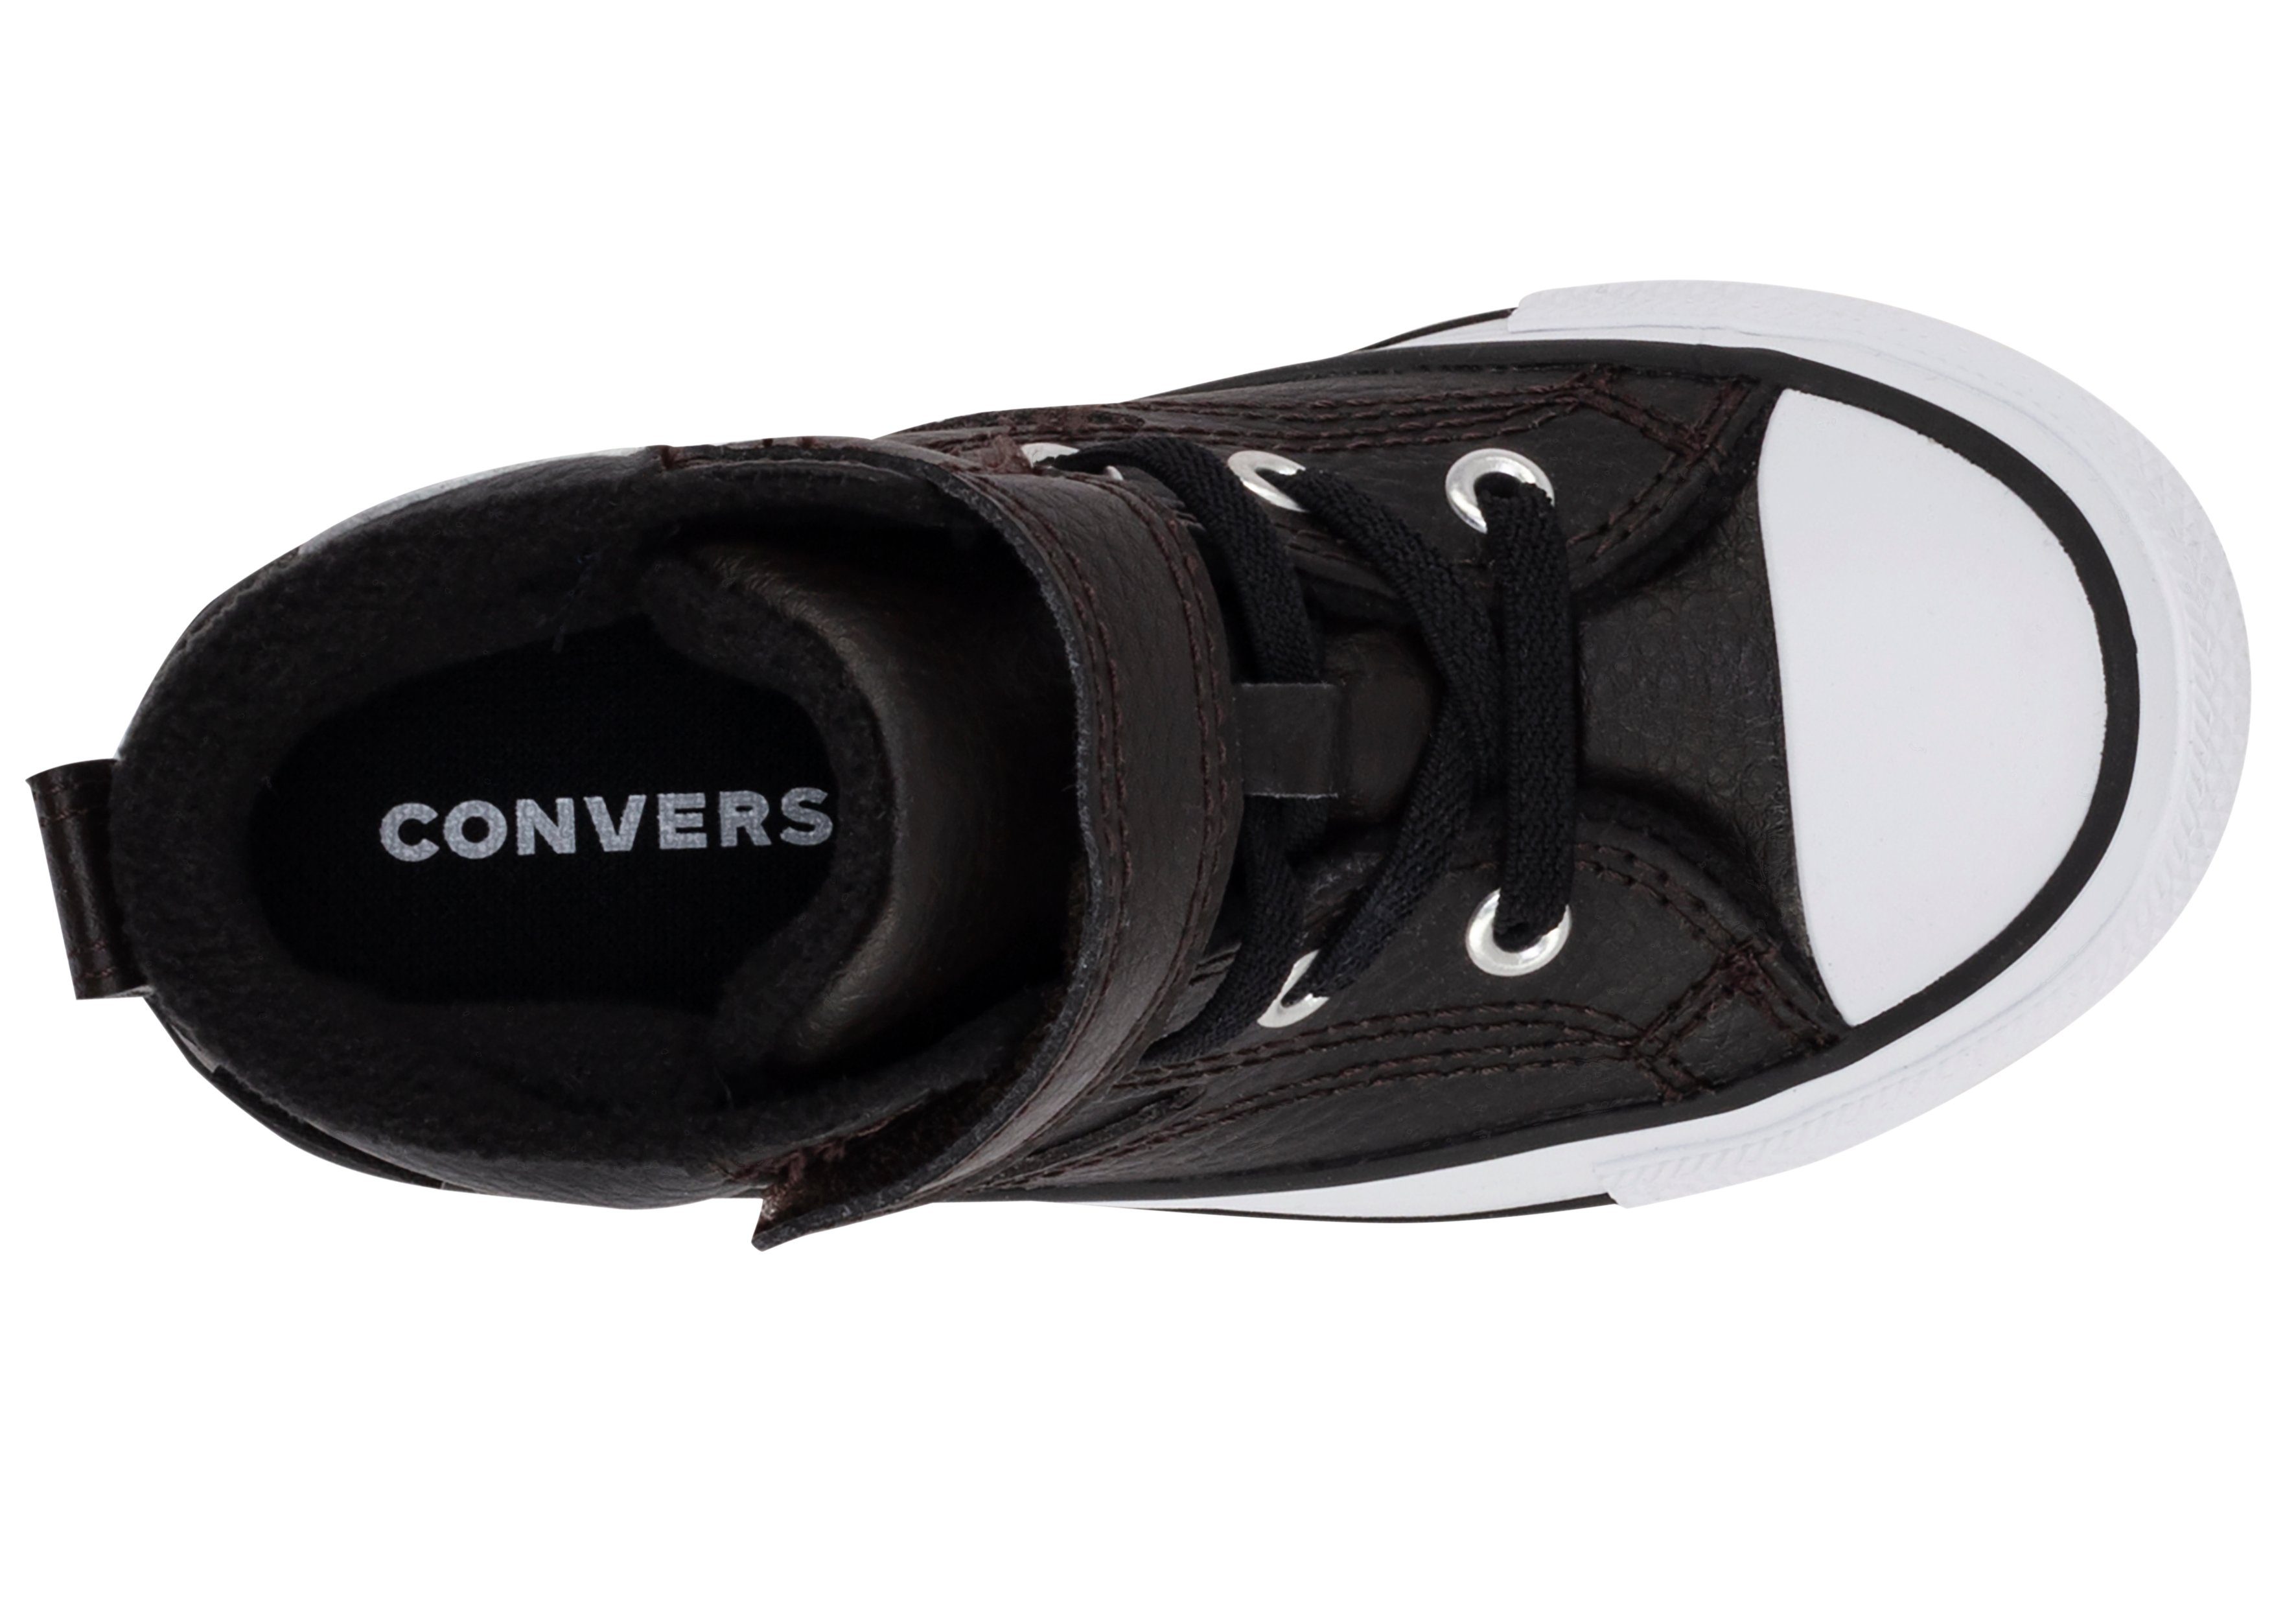 CHUCK STAR Sneaker Converse ON ALL TAYLOR MALDE Warmfutter EASY